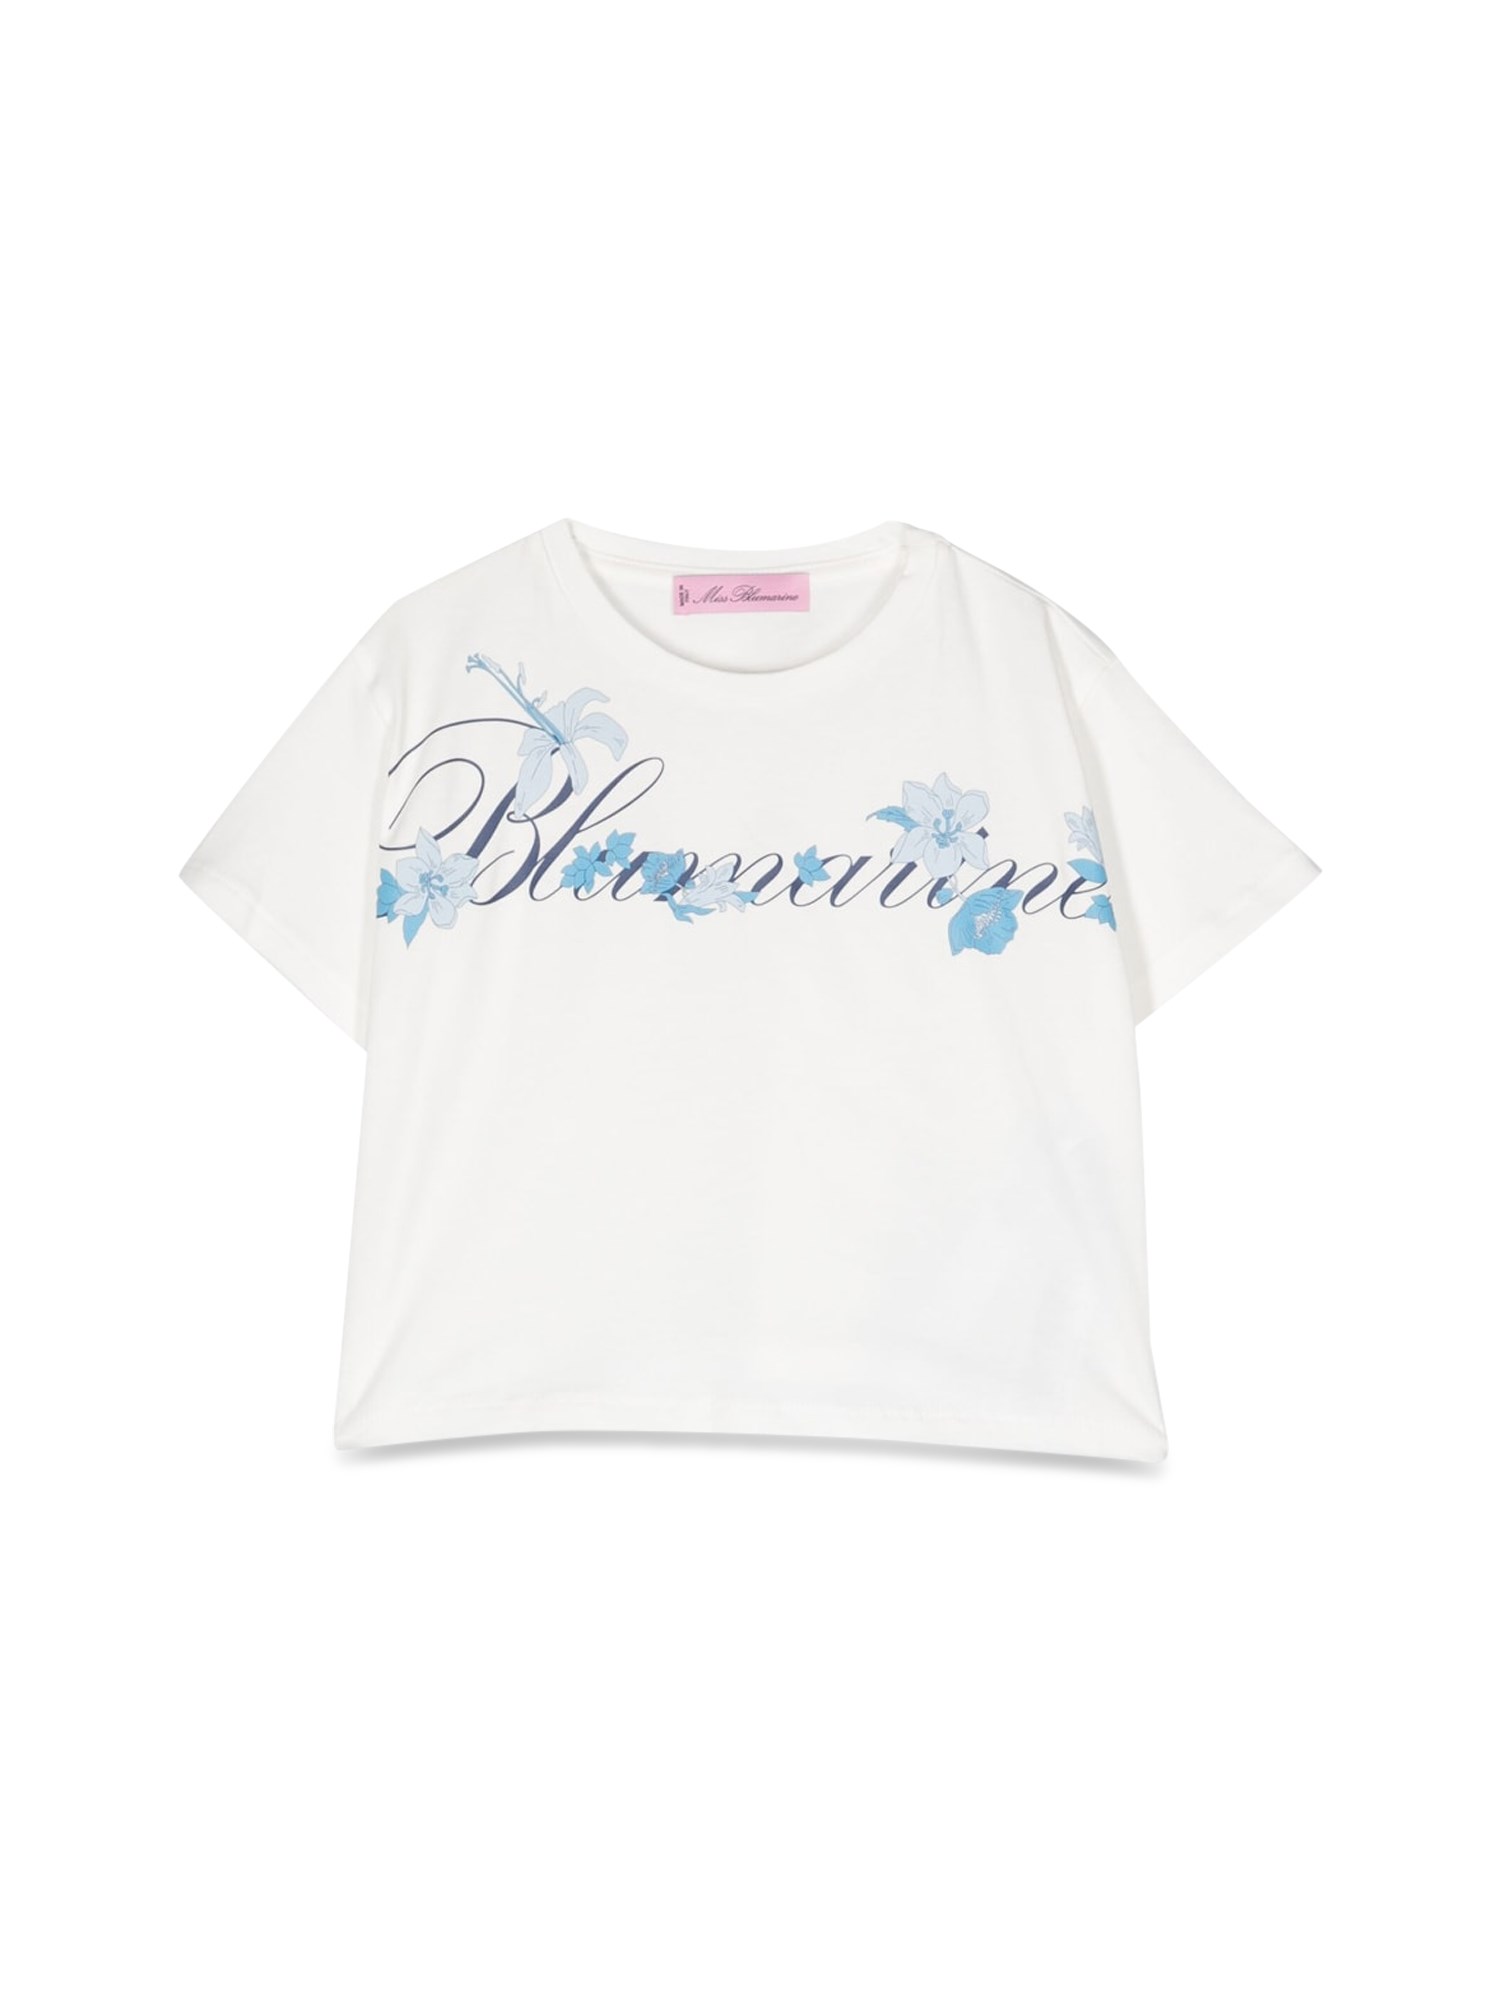 miss blumarine t-shirt logo